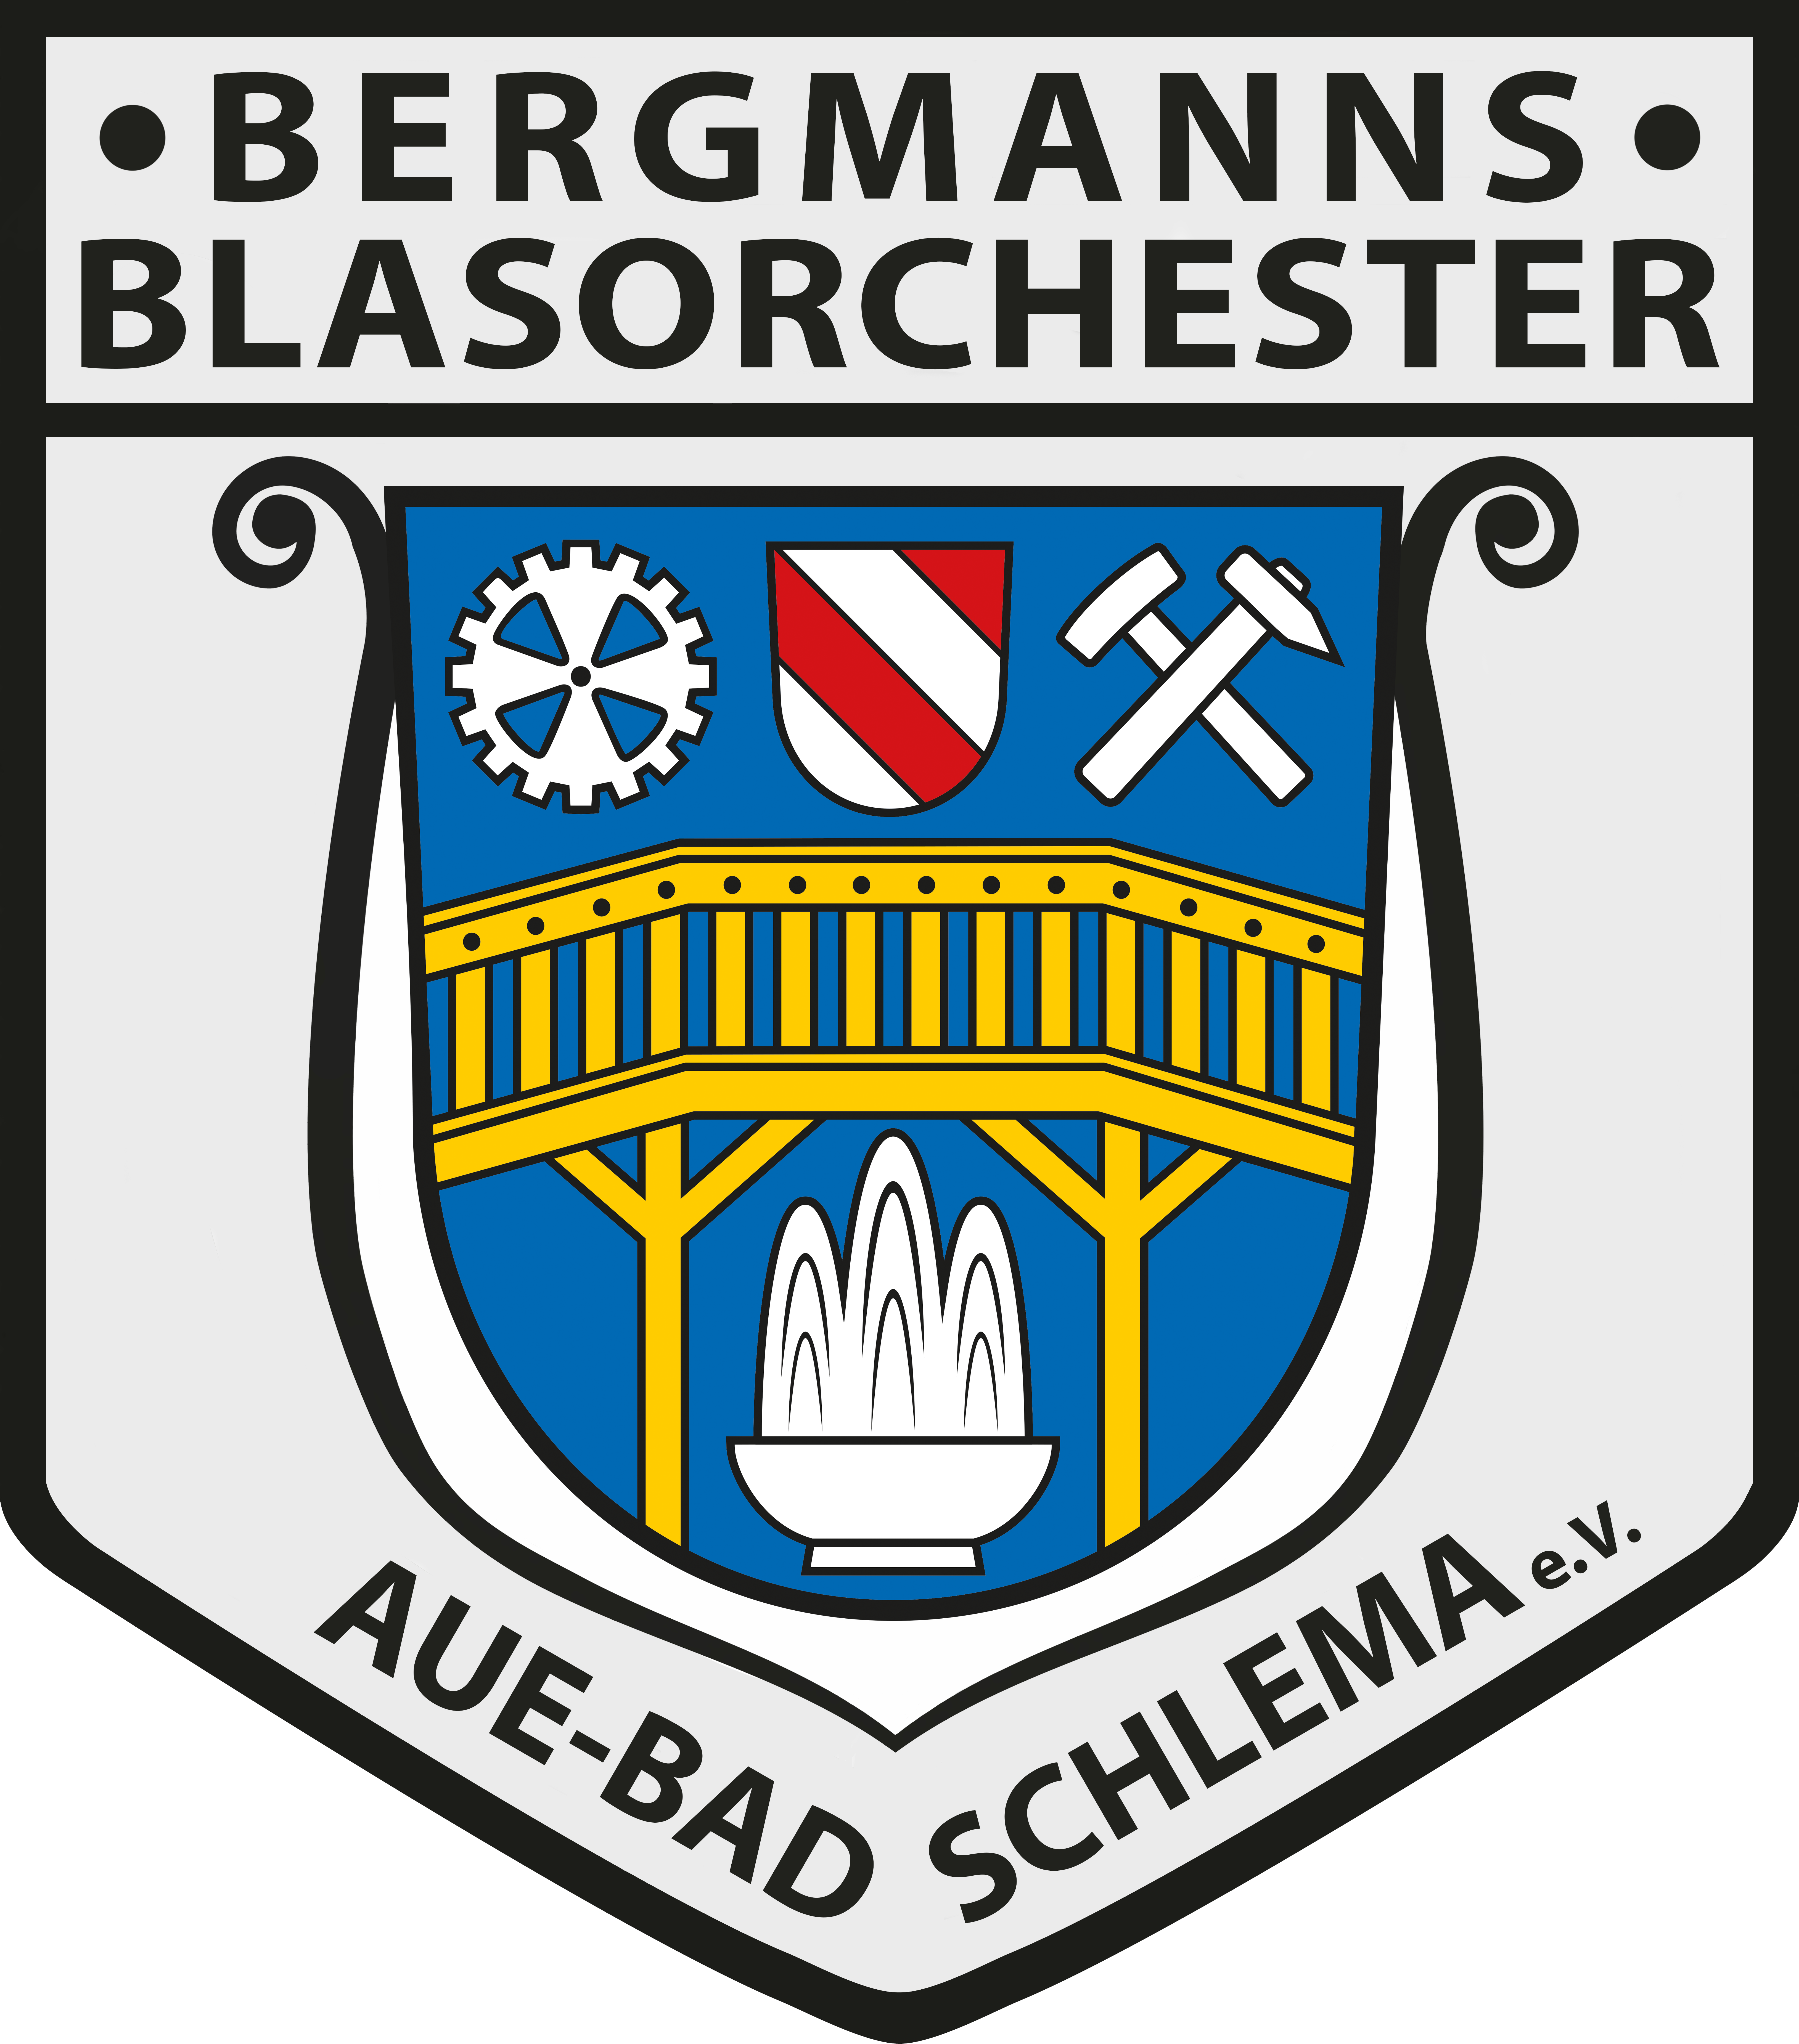 Bergmannsblasorchester Aue-Bad Schlema e.V.